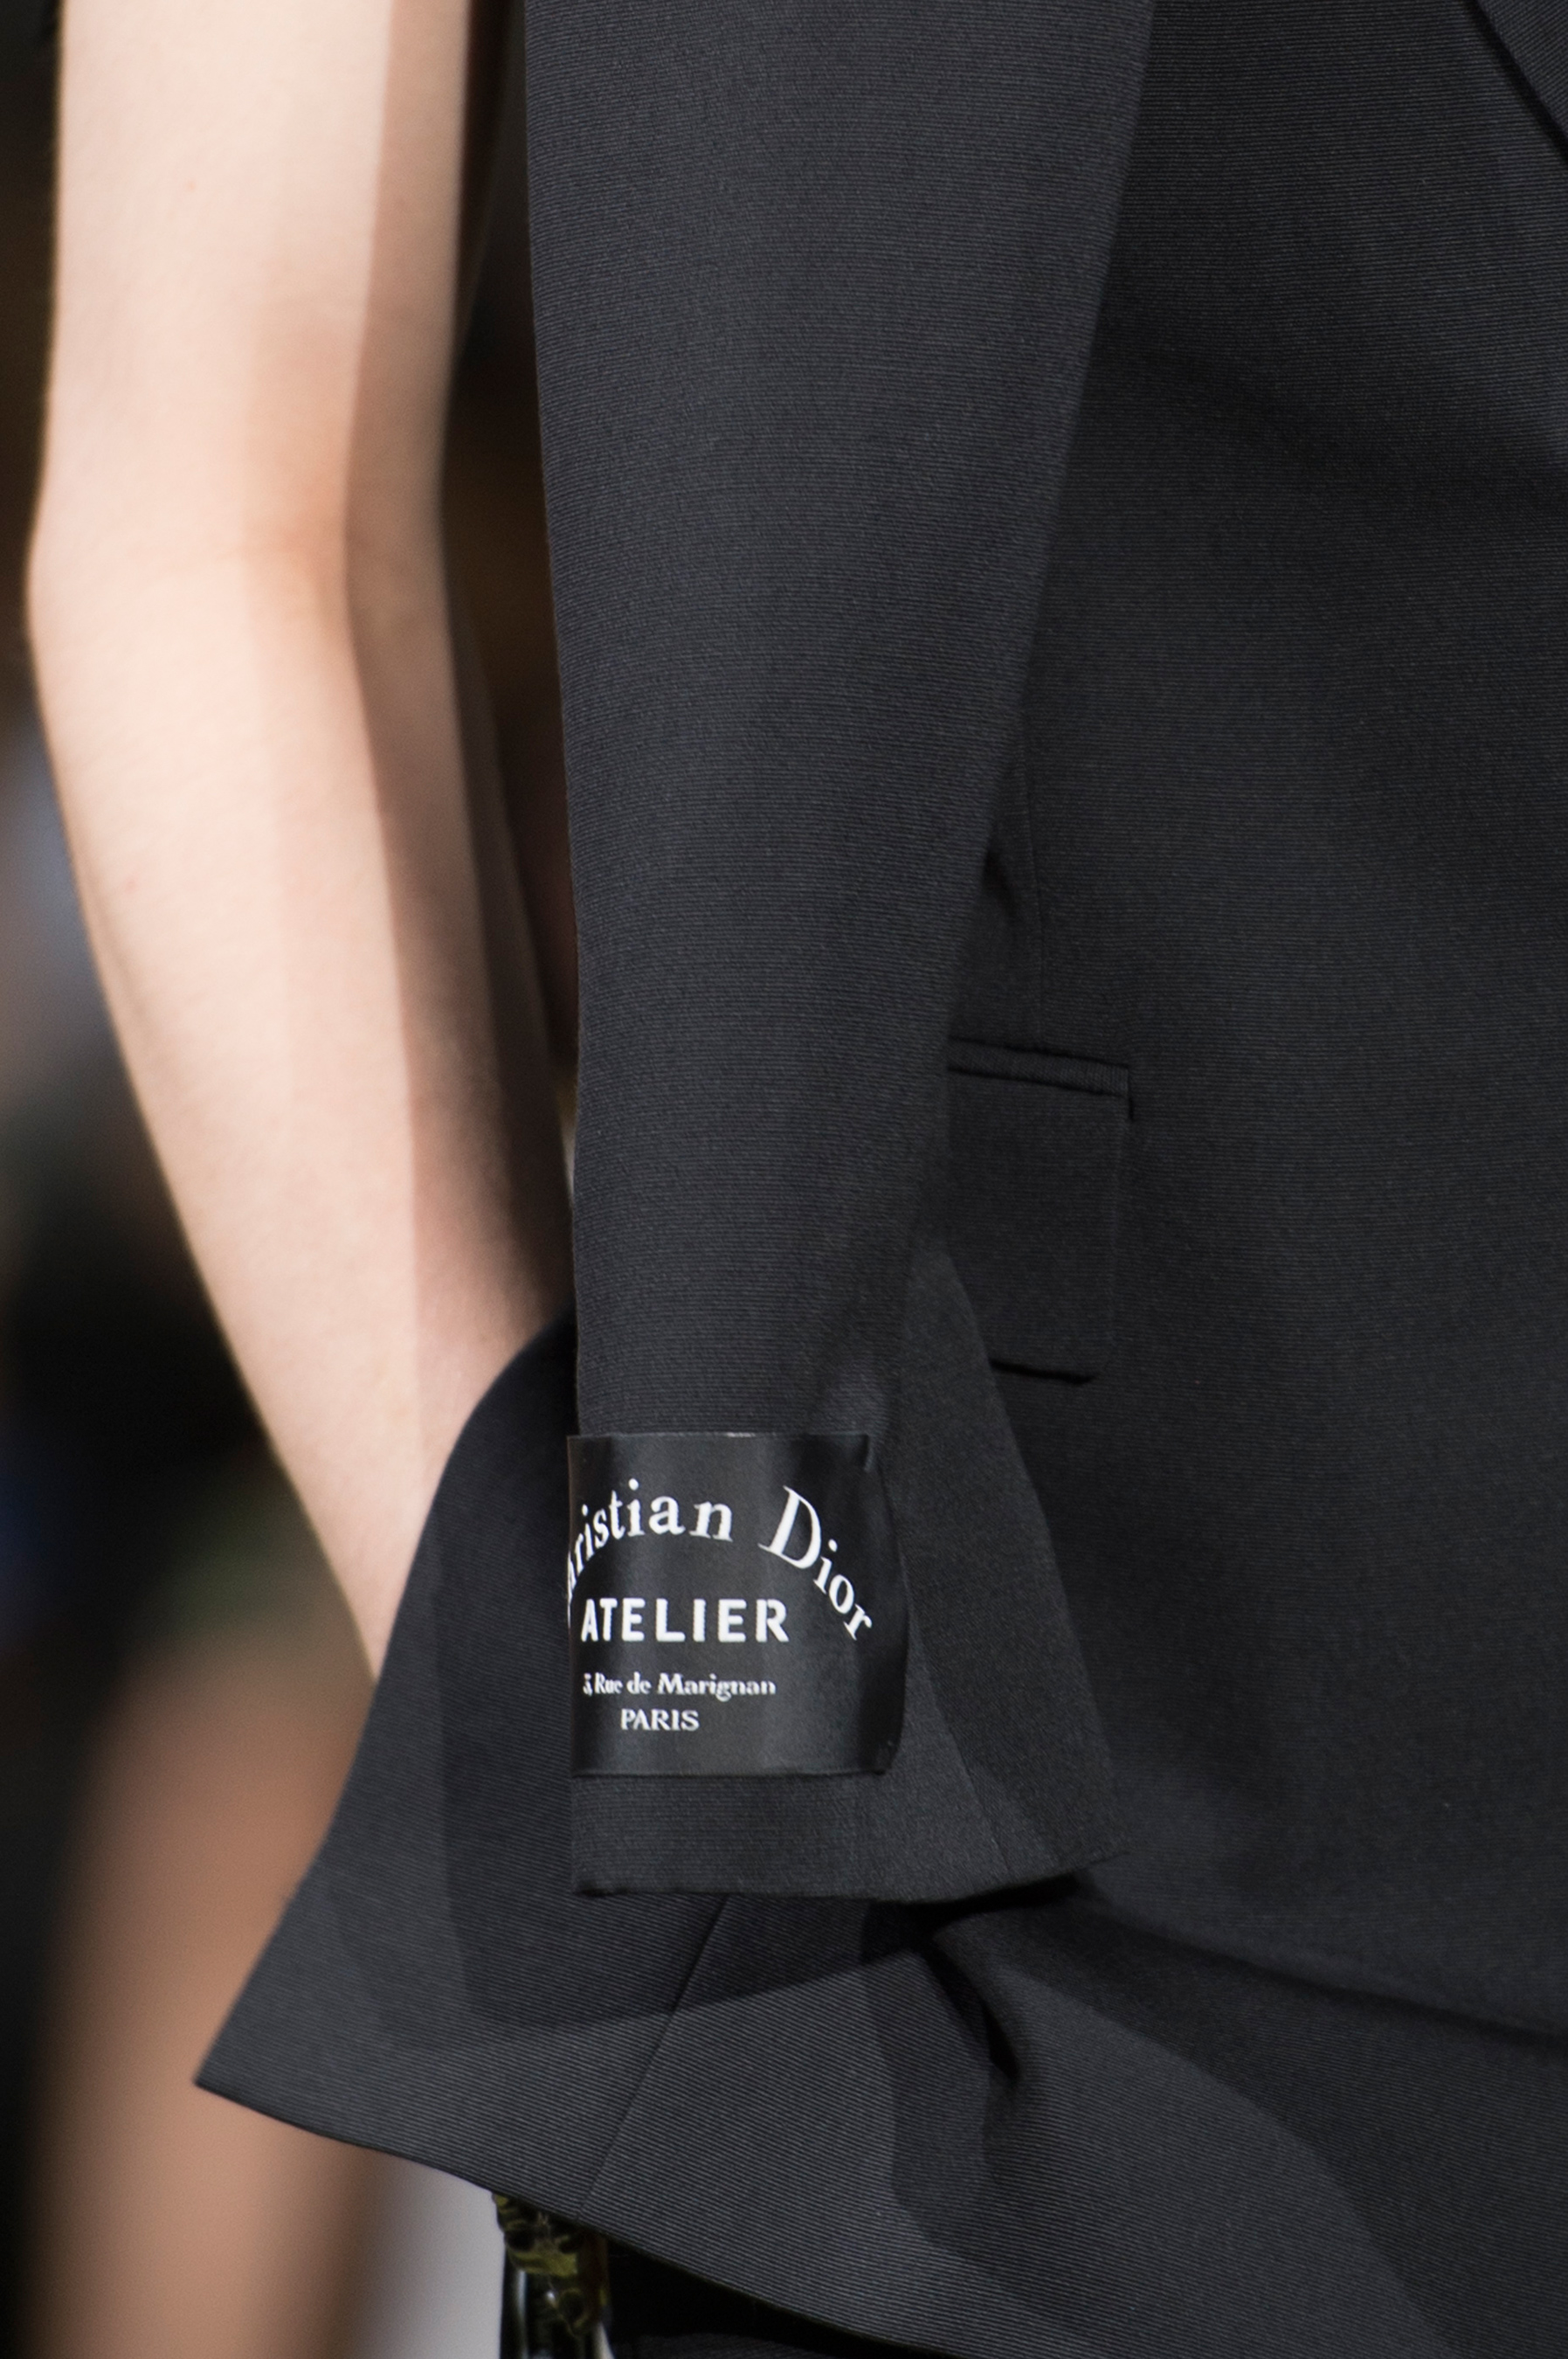 Dior Homme Spring 2018 Men's Fashion Show Details - The Impression